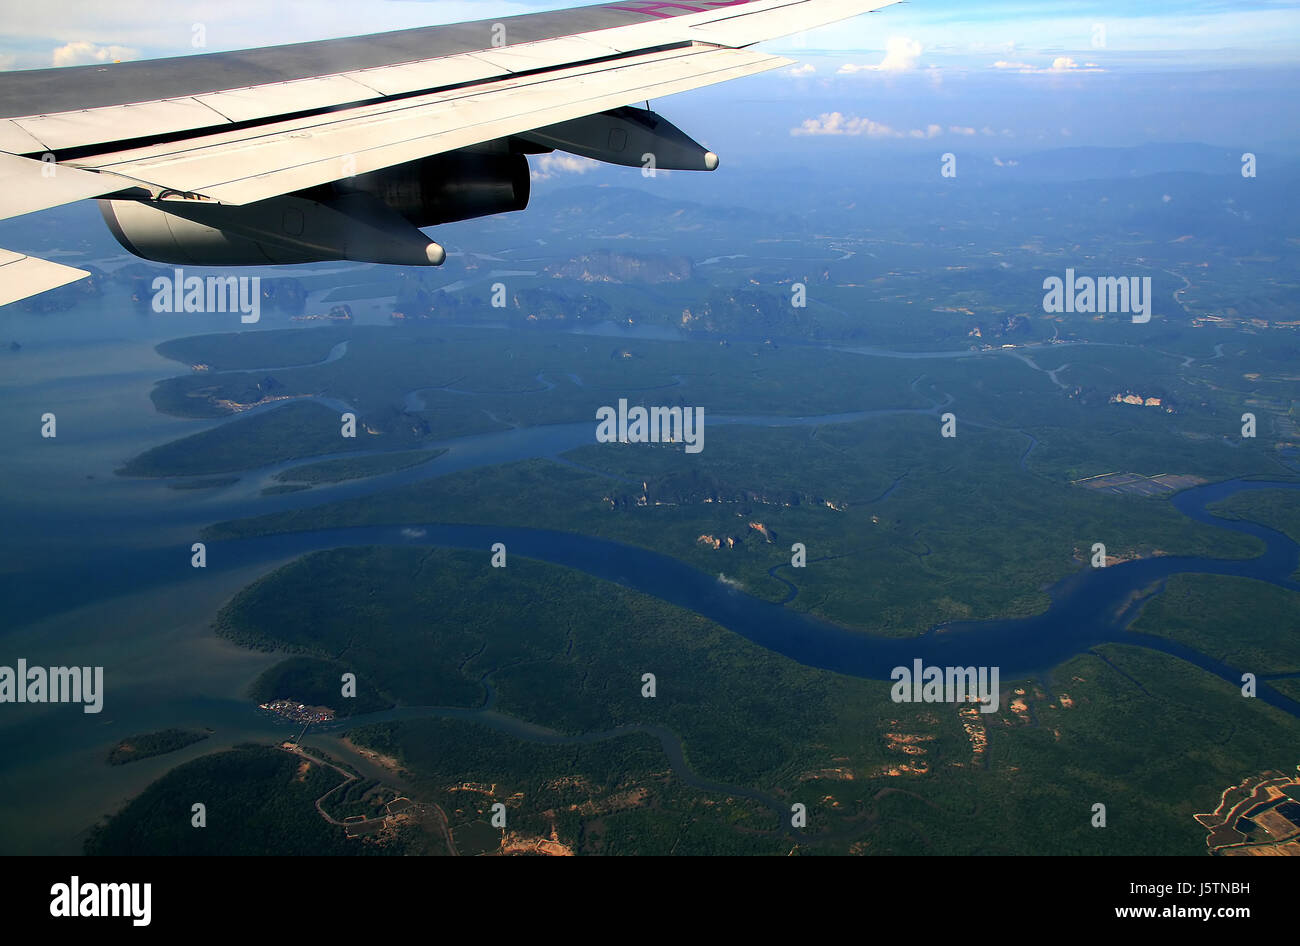 Ala di volo thailandia aereo aereo aereo aereo acqua salata oceano mare Foto Stock